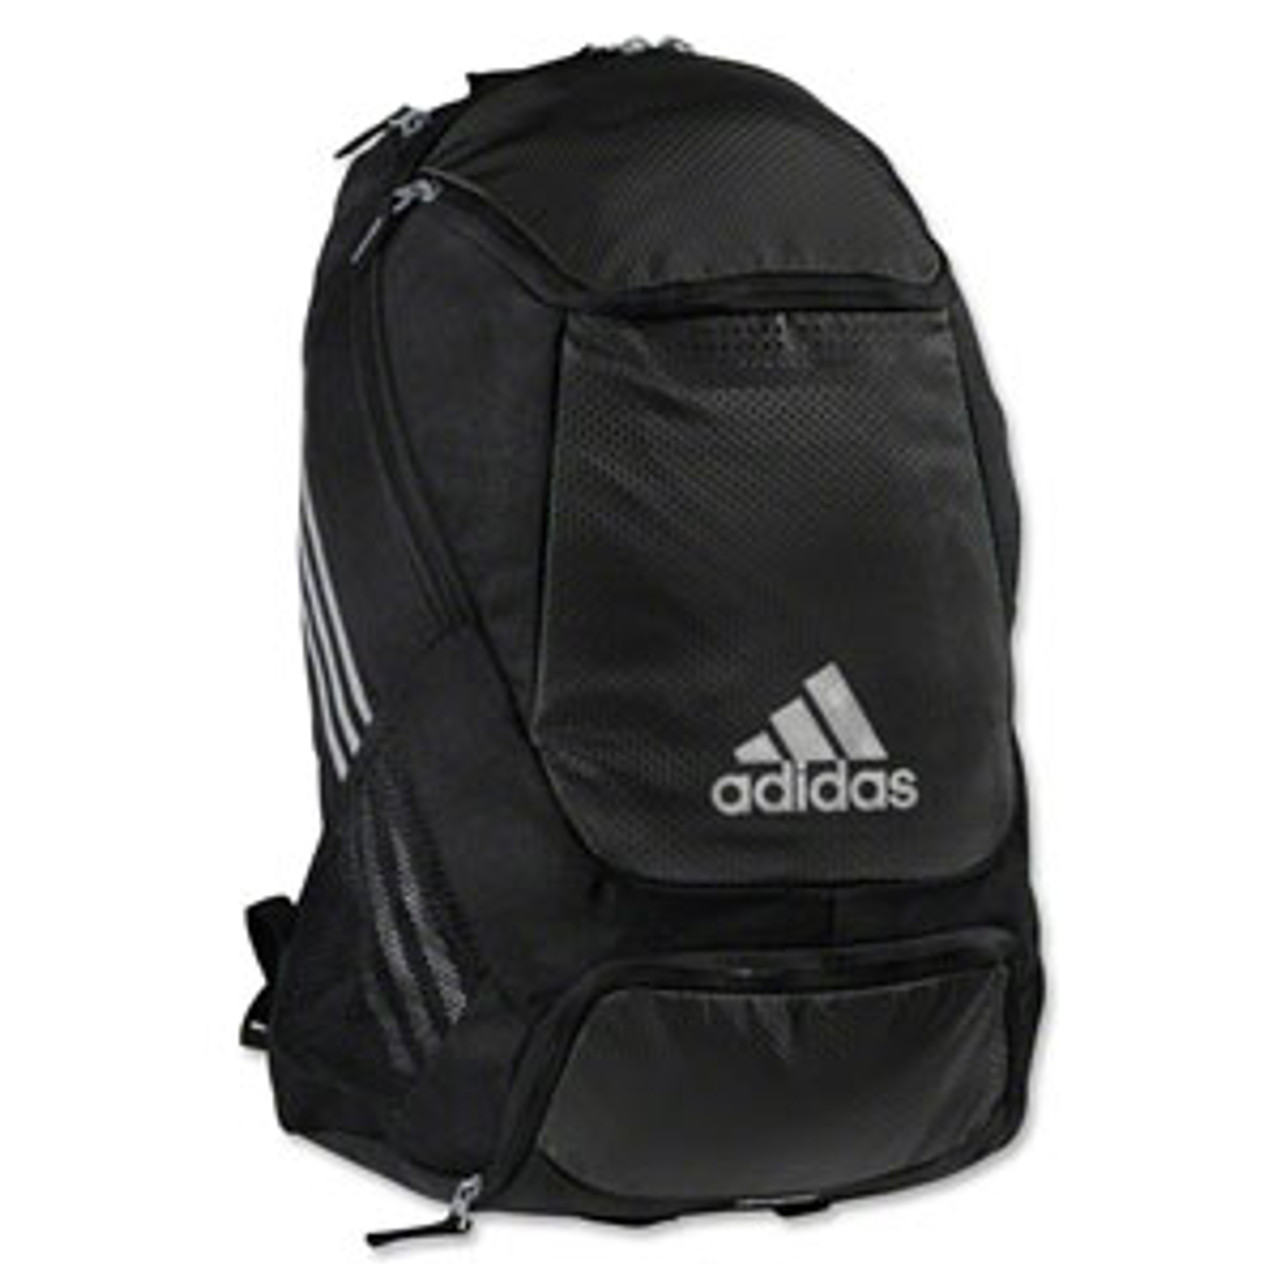 adidas soccer backpack stadium